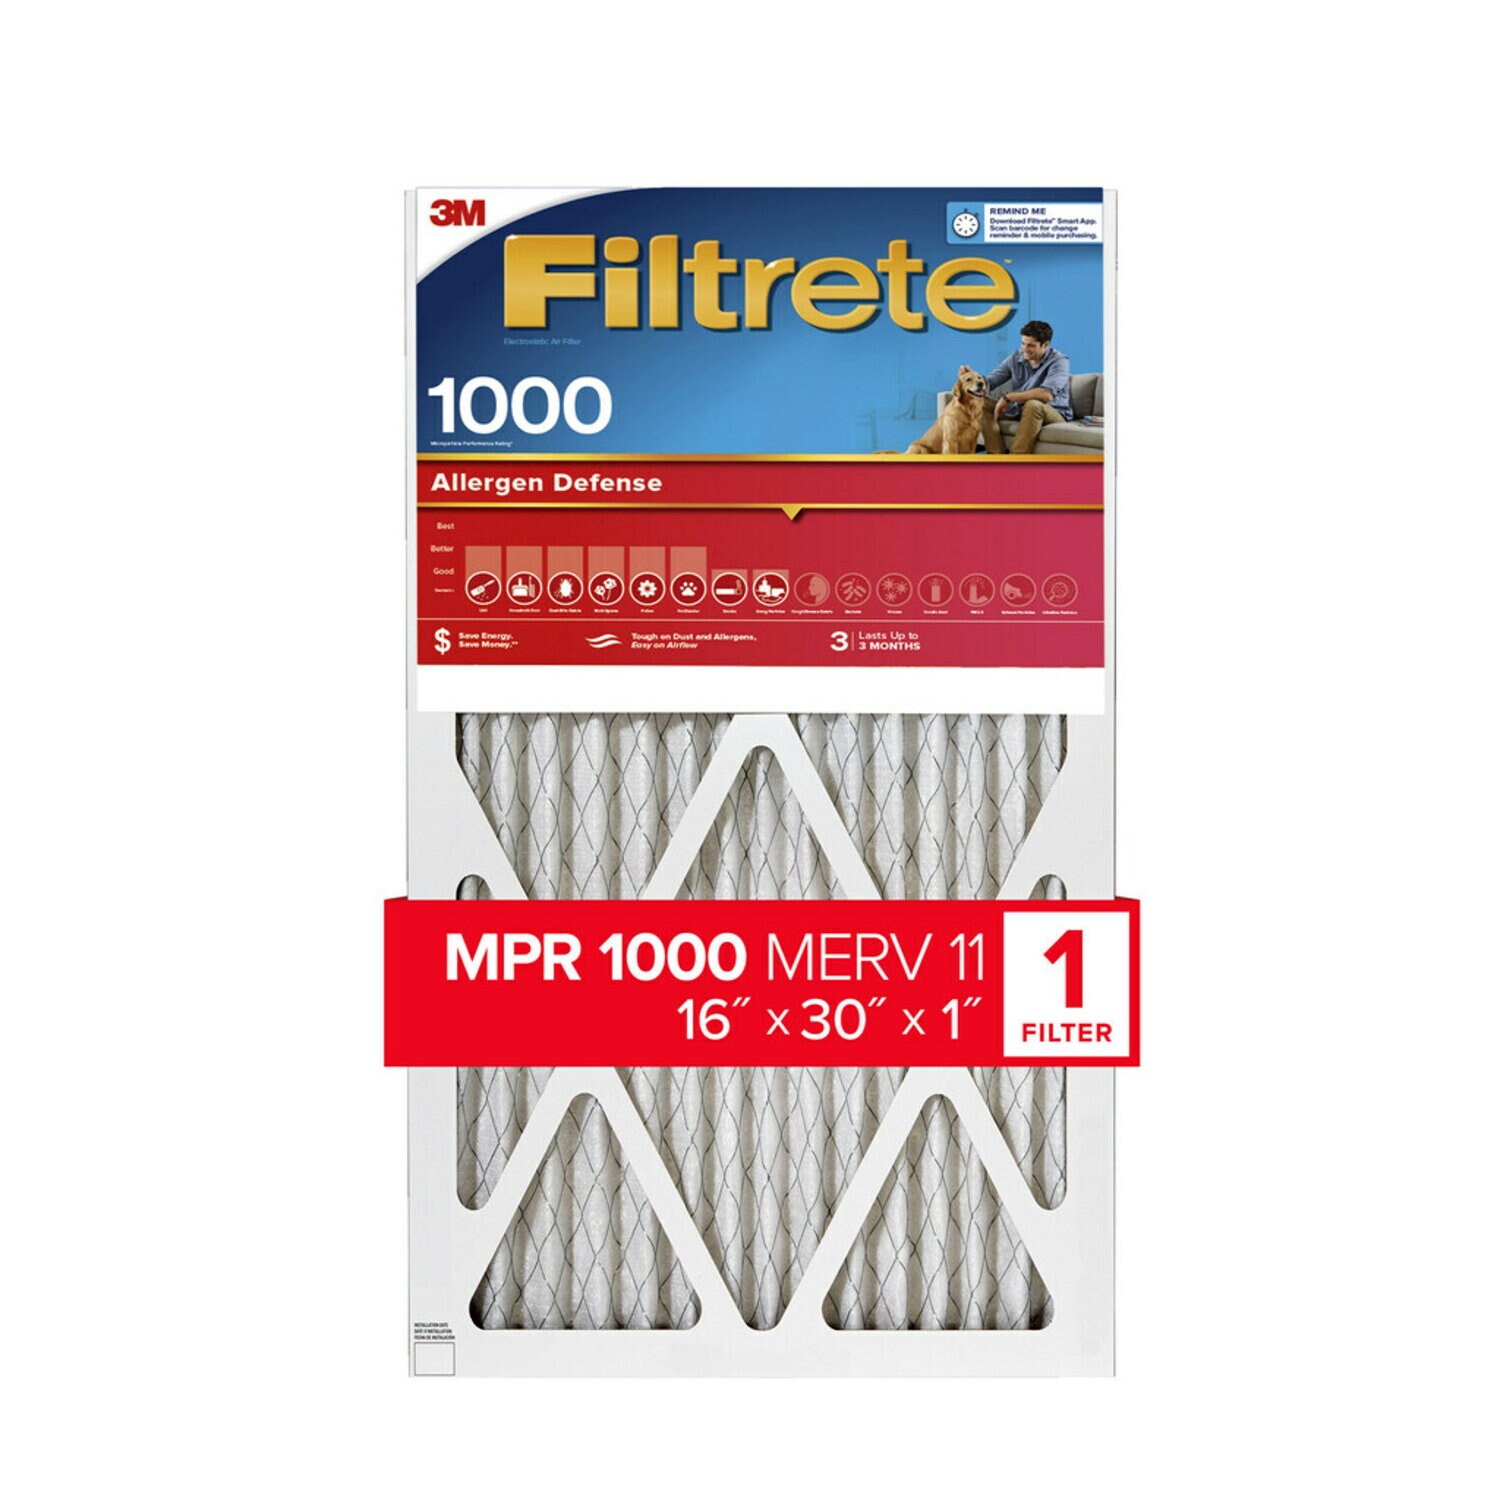 7100192544 - Filtrete Allergen Defense Air Filter, 1000 MPR, AL27-4, 16 in x 30 in x
1 in (40,6 cm x 76,2 cm x 2,5 cm)